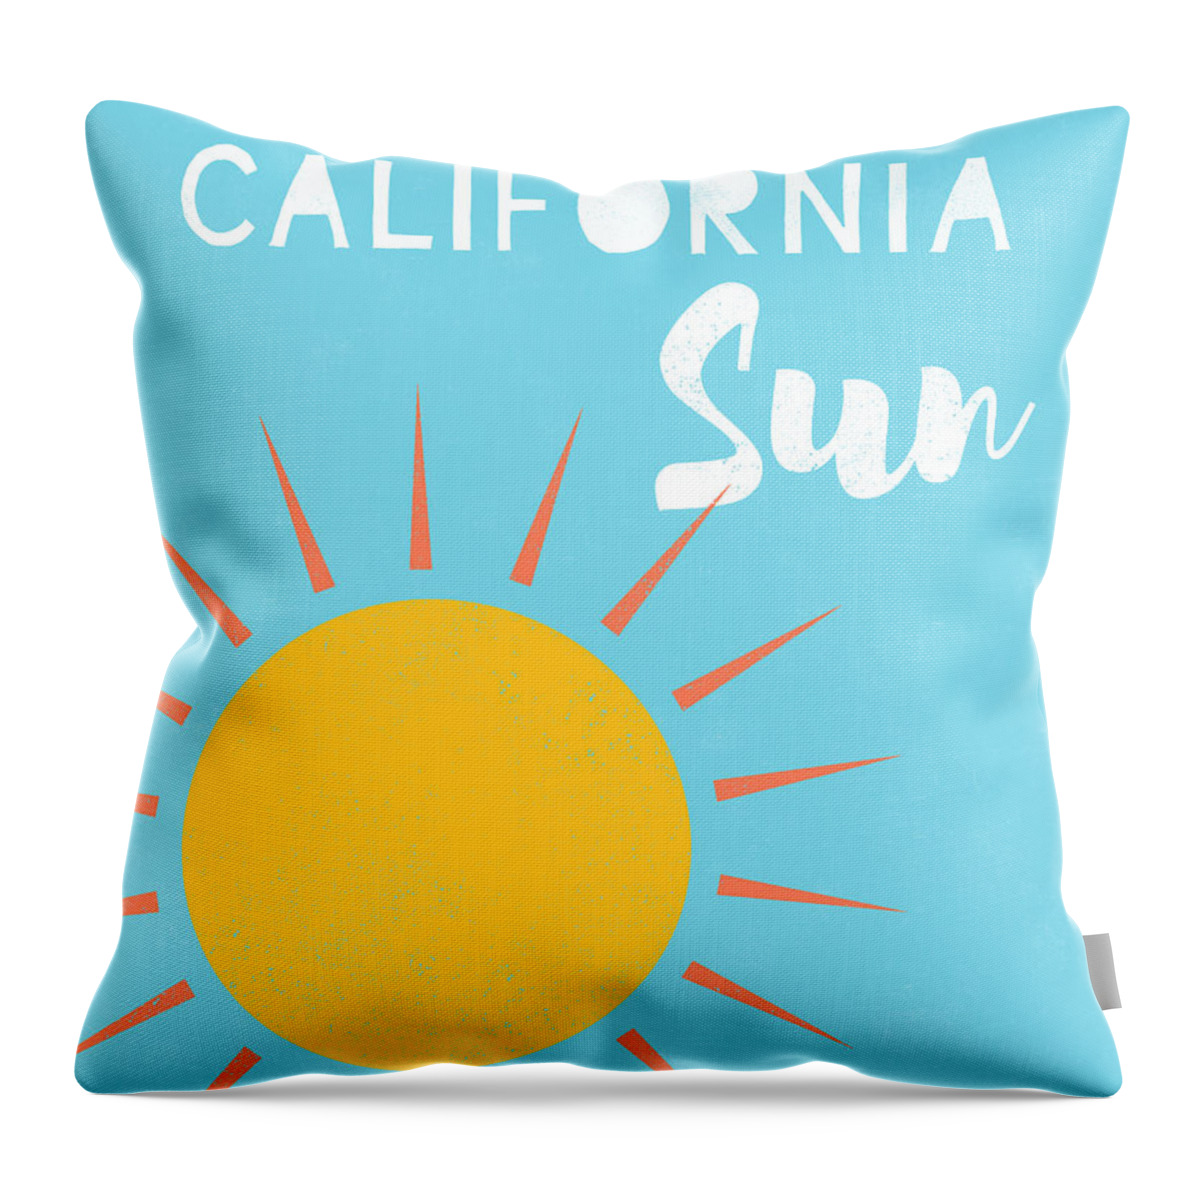 California Throw Pillow featuring the digital art California Sun- Art by Linda Woods by Linda Woods